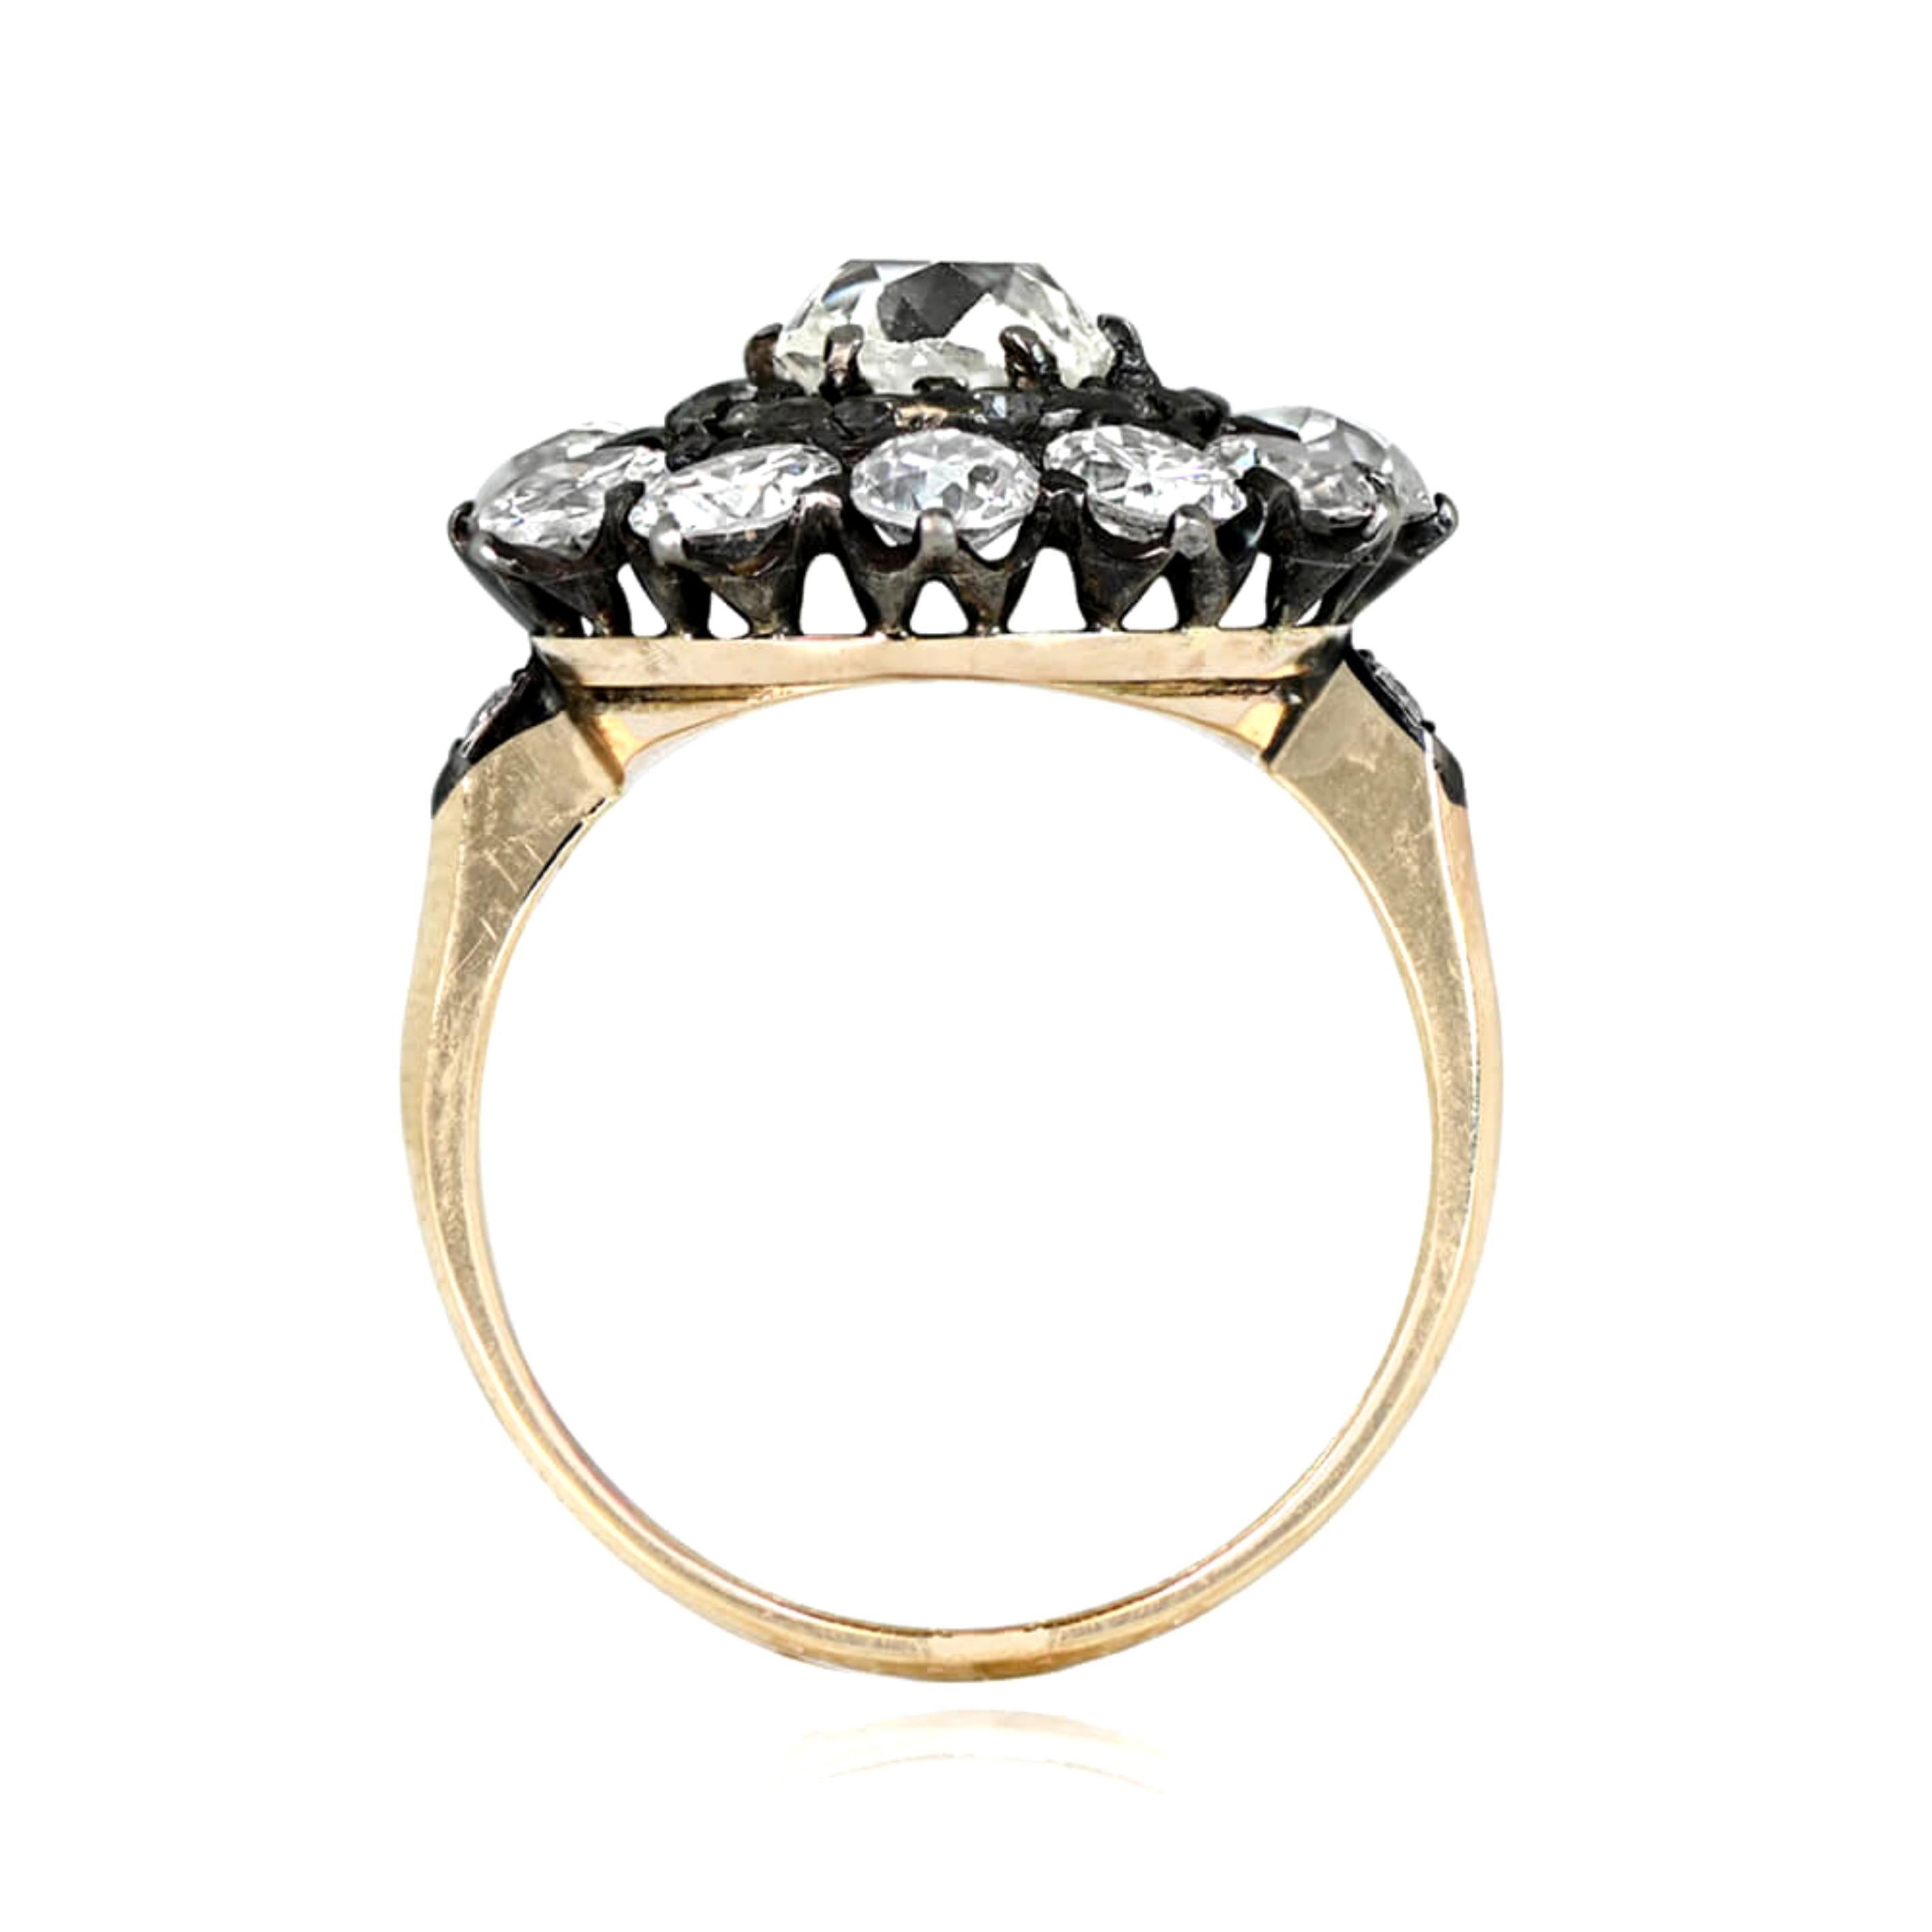 Victorian Antique 1.52ct Cushion-Cut Diamond Engagement Ring, 18k Yellow Gold, circa 1880